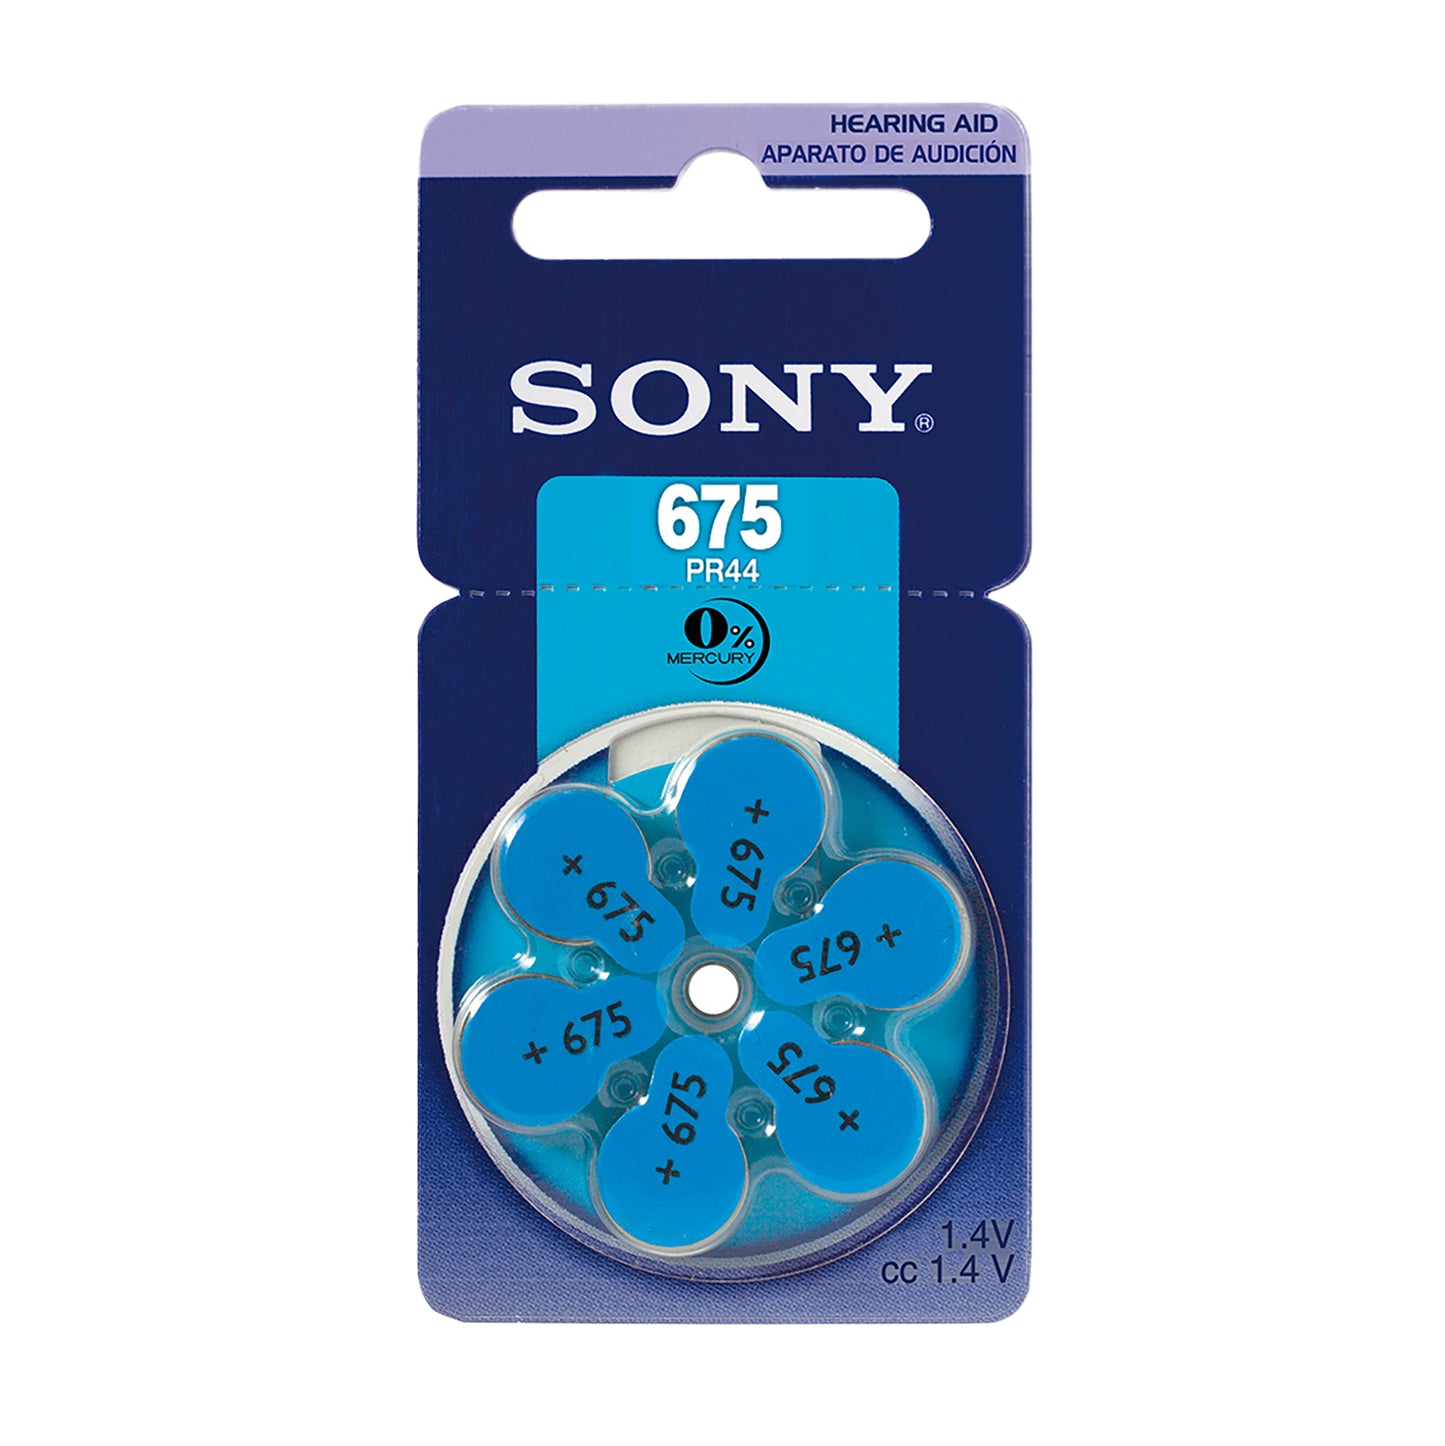 SON-675-6 - батарейка для слуховых аппаратов Sony 675, тип PR44, 1.4 В (6 шт. в блистере)